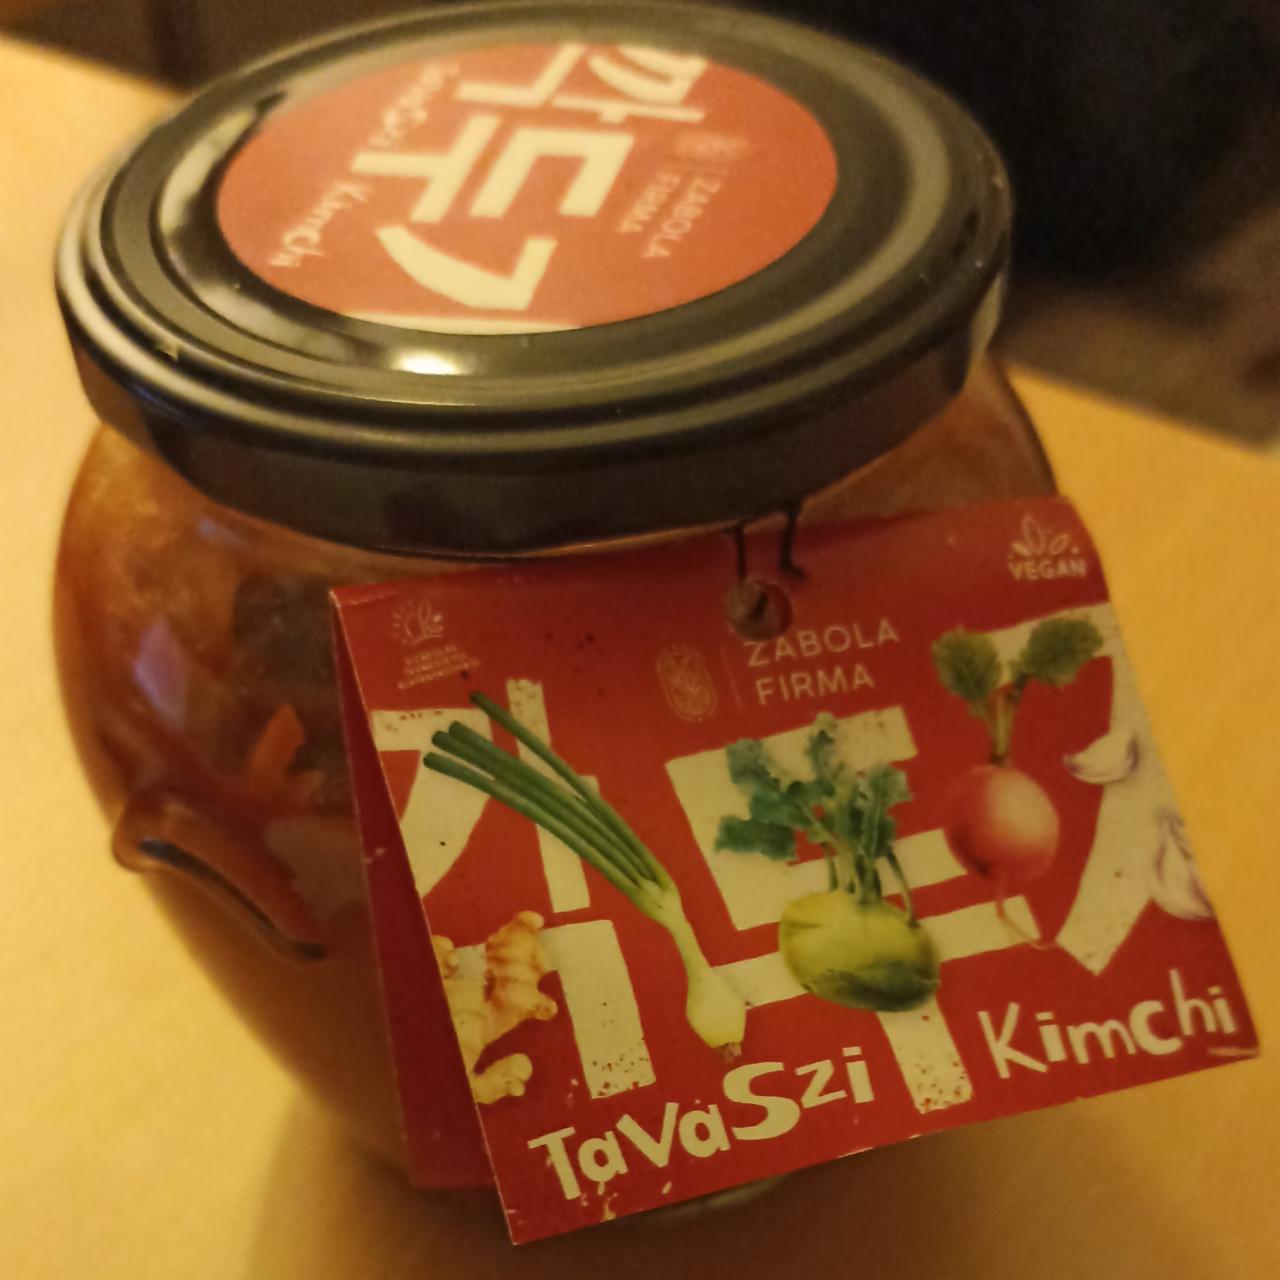 Képek - Tavaszi kimchi Zabola Firma